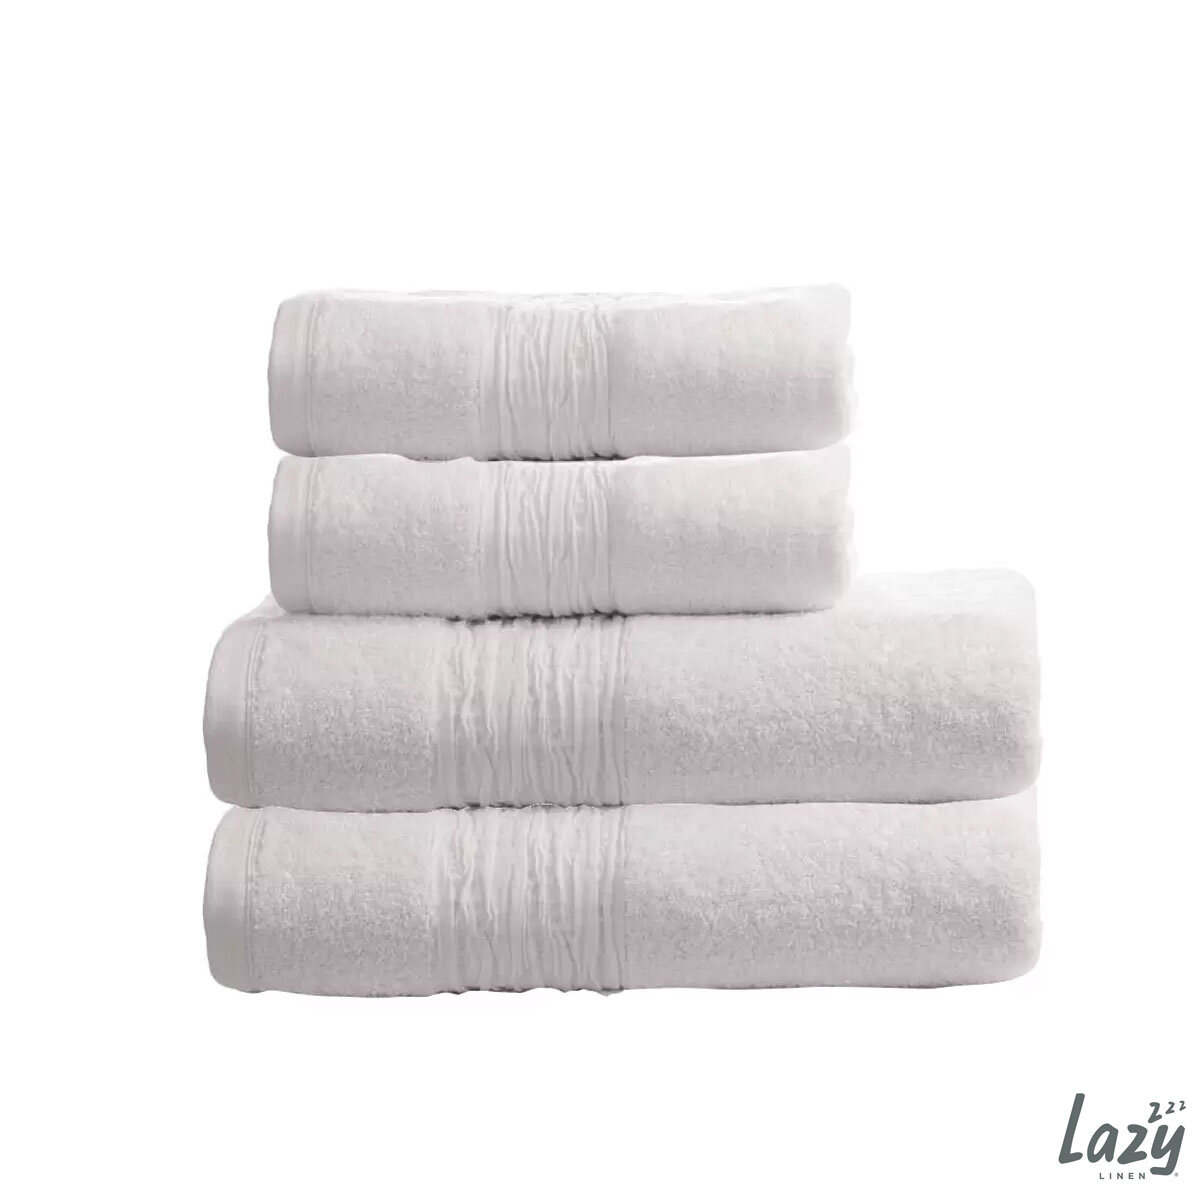 Lazy Linen 4 Piece Hand & Bath Sheet Towel Bundle in White, 2 x Hand Towels & 2 x Bath Sheets